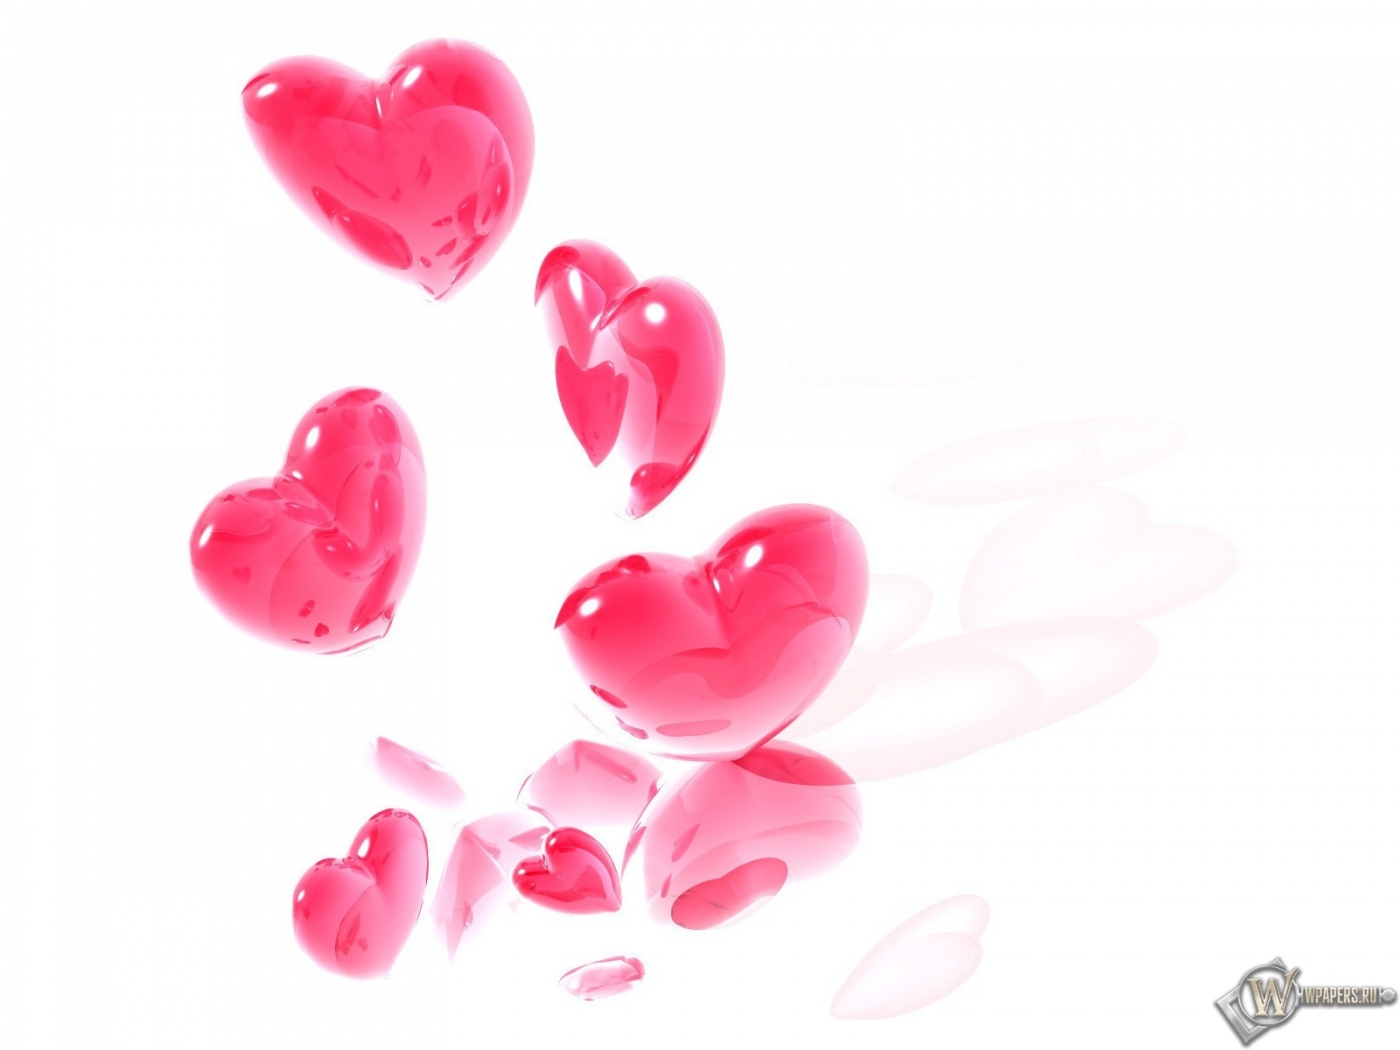 Розовые сердечки 1400x1050